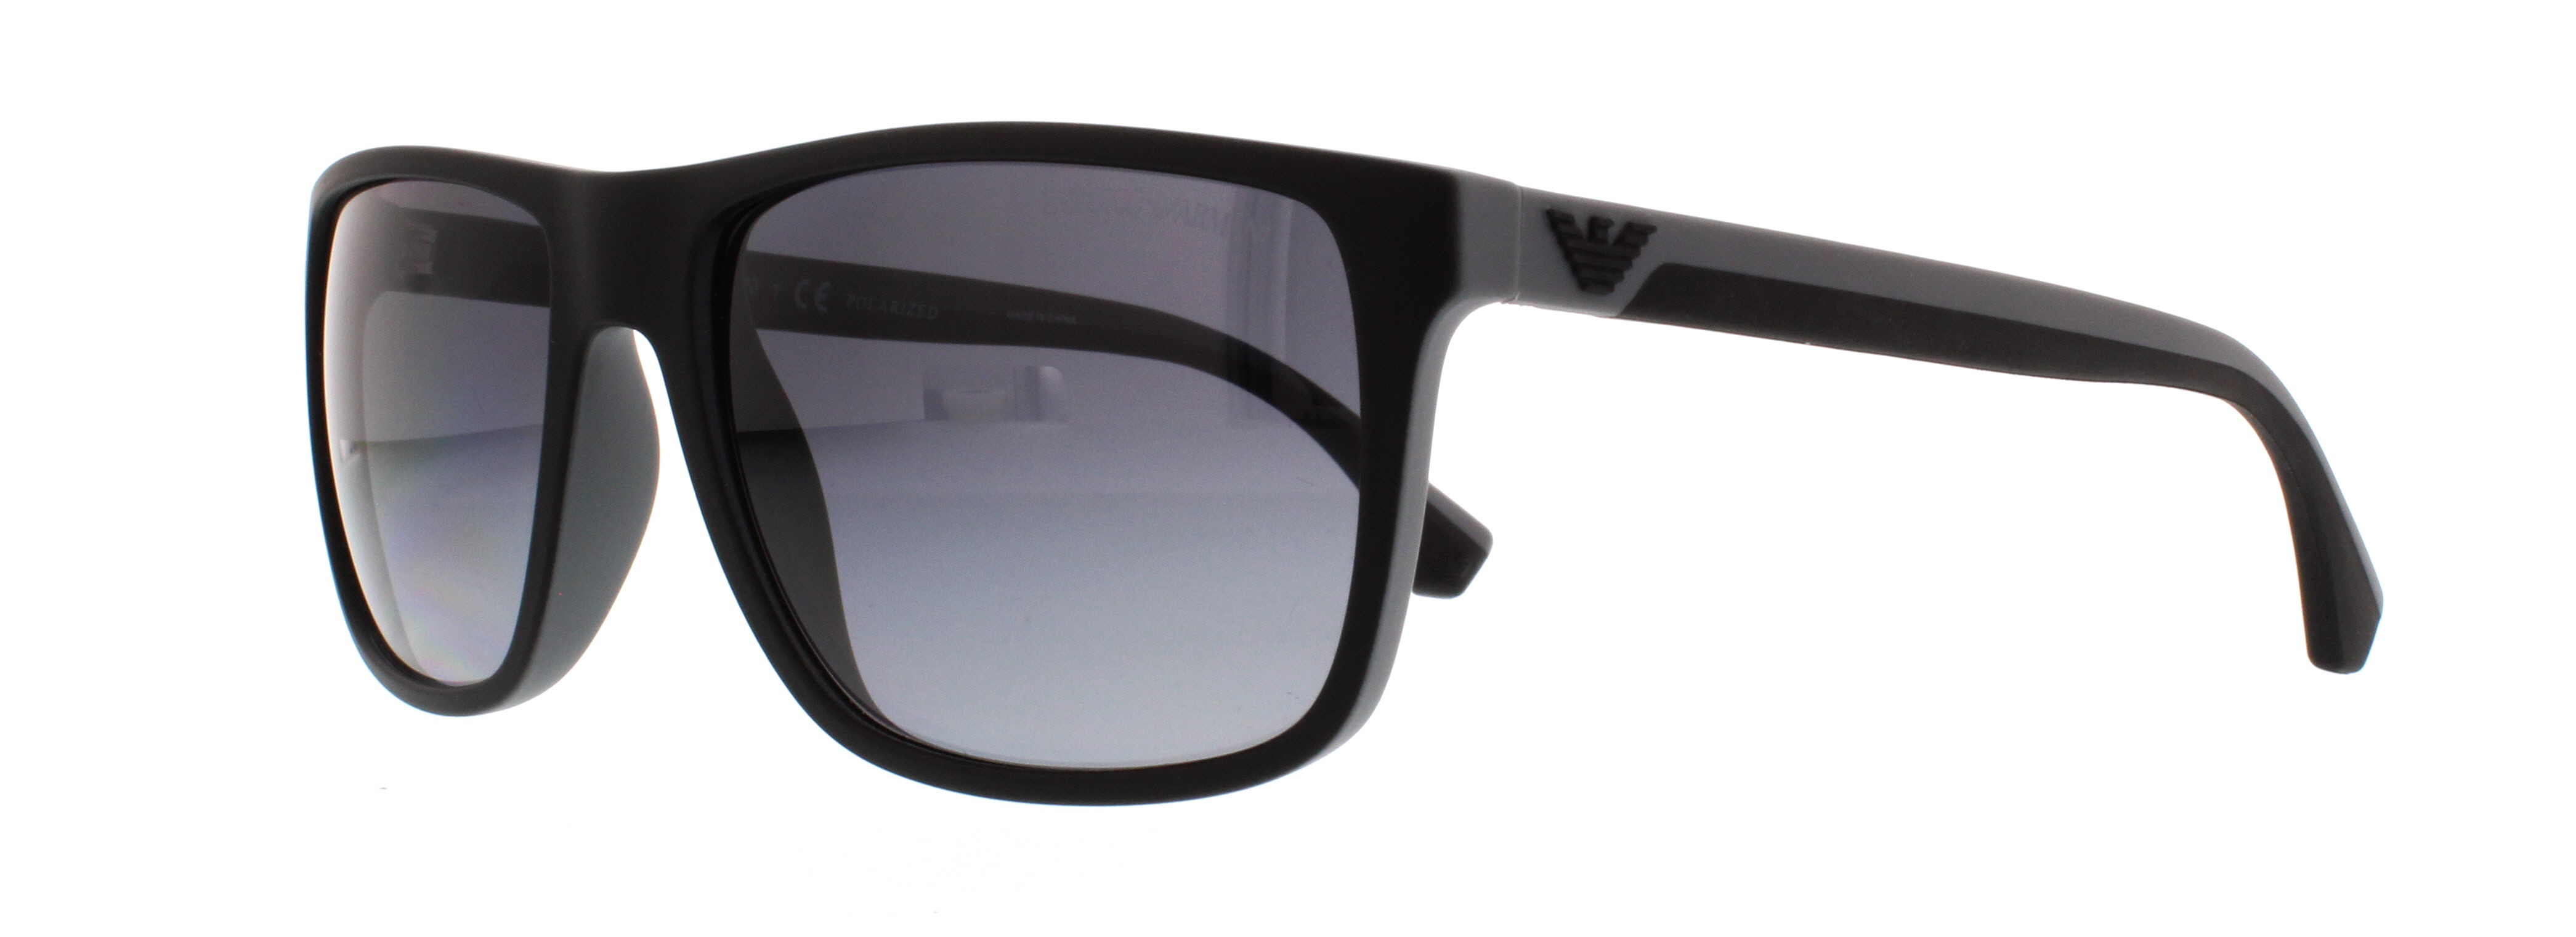 Designer Frames Outlet. Emporio Armani Sunglasses EA4033